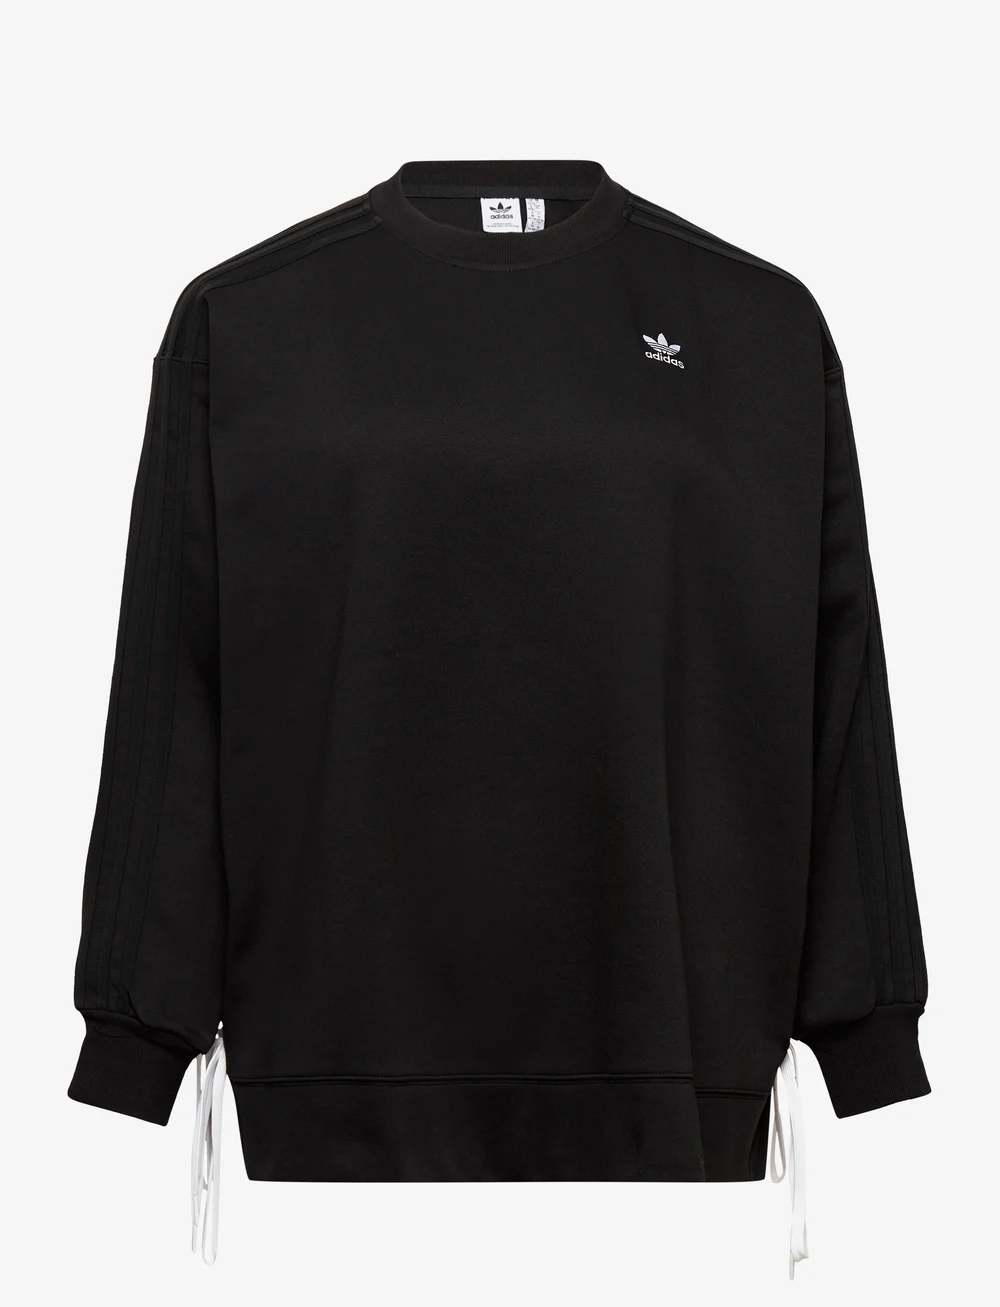 adidas Originals Always Original Laced Crew Sweatshirt (plus Size) -  Sweatshirts